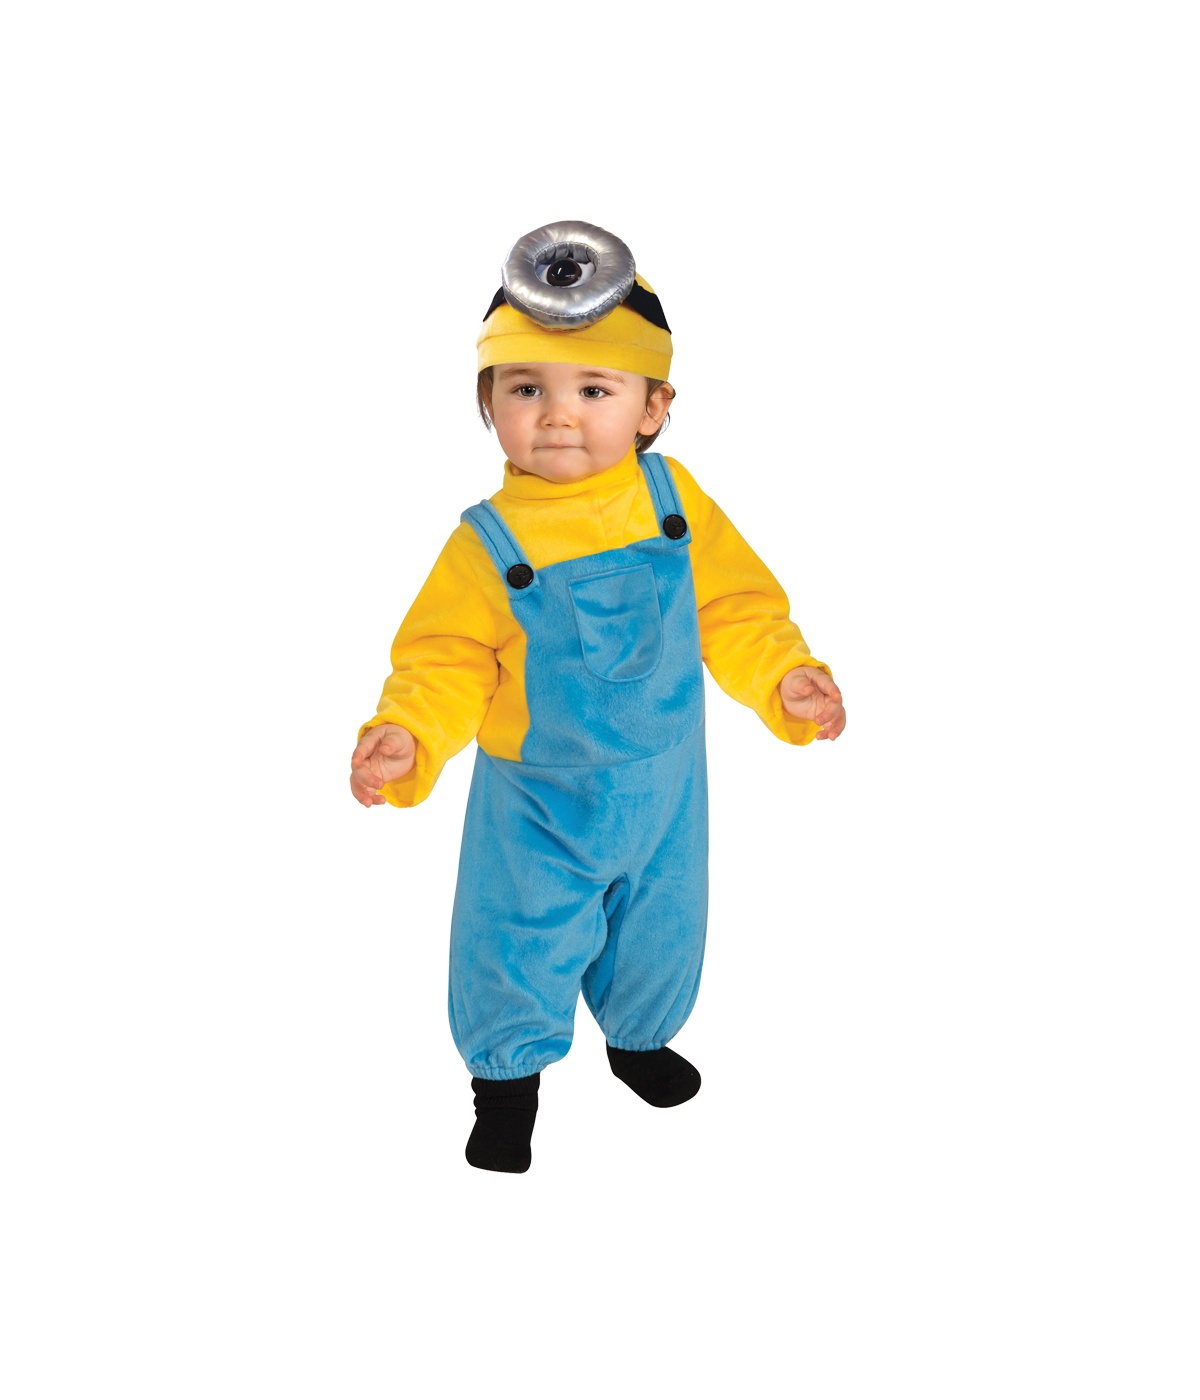  Minion Stuart Baby Costume